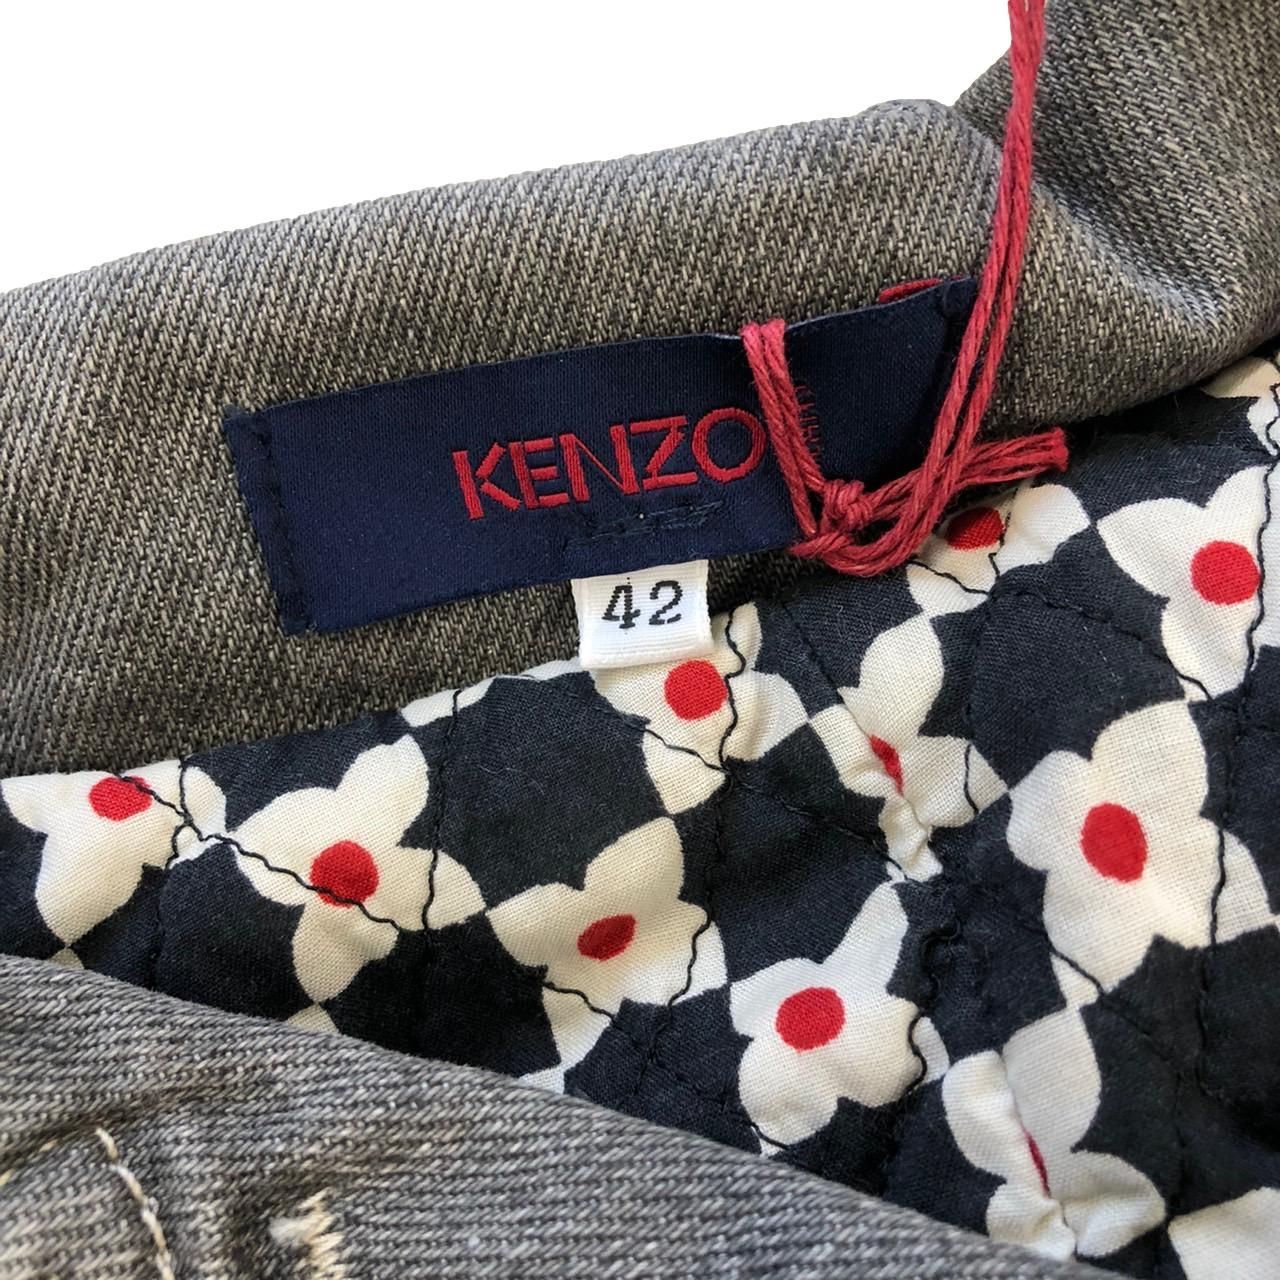 KENZO ケンゾー デニム ジャケット 40サイズ 42サイズ - メルカリ